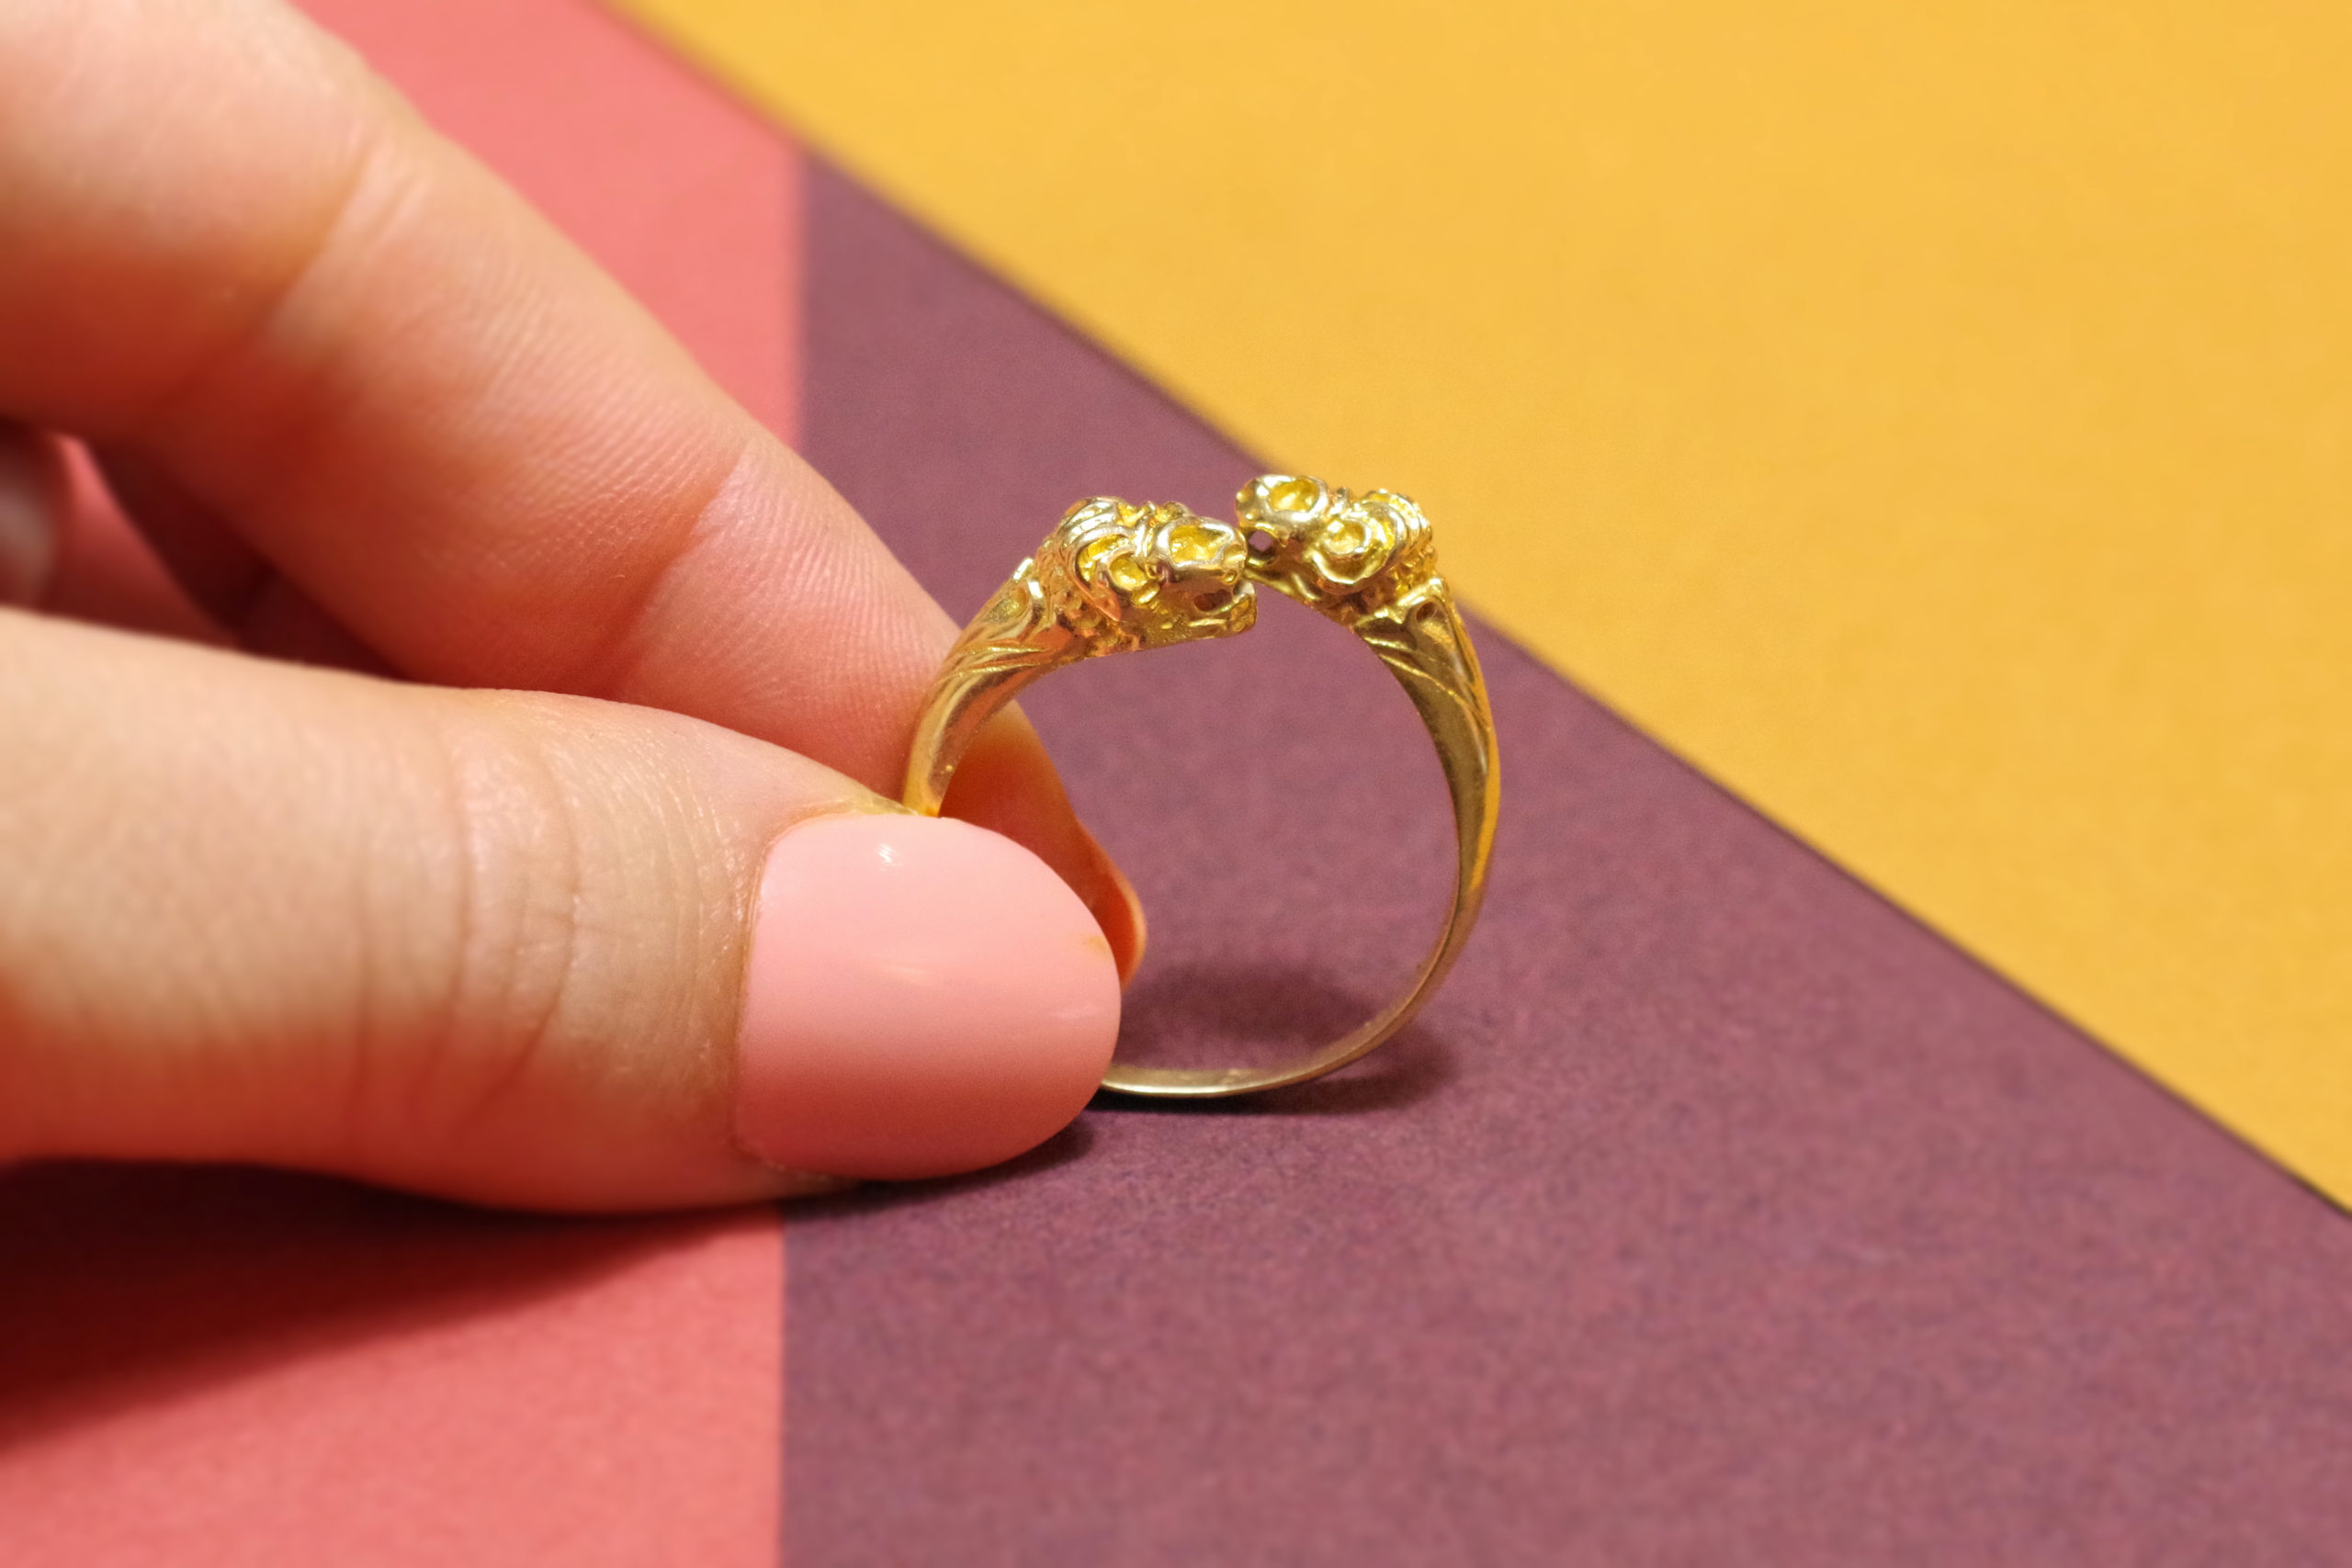 Seal Ring Men's Ring 585 Gold - Size 59 - 6,20 Gram | eBay